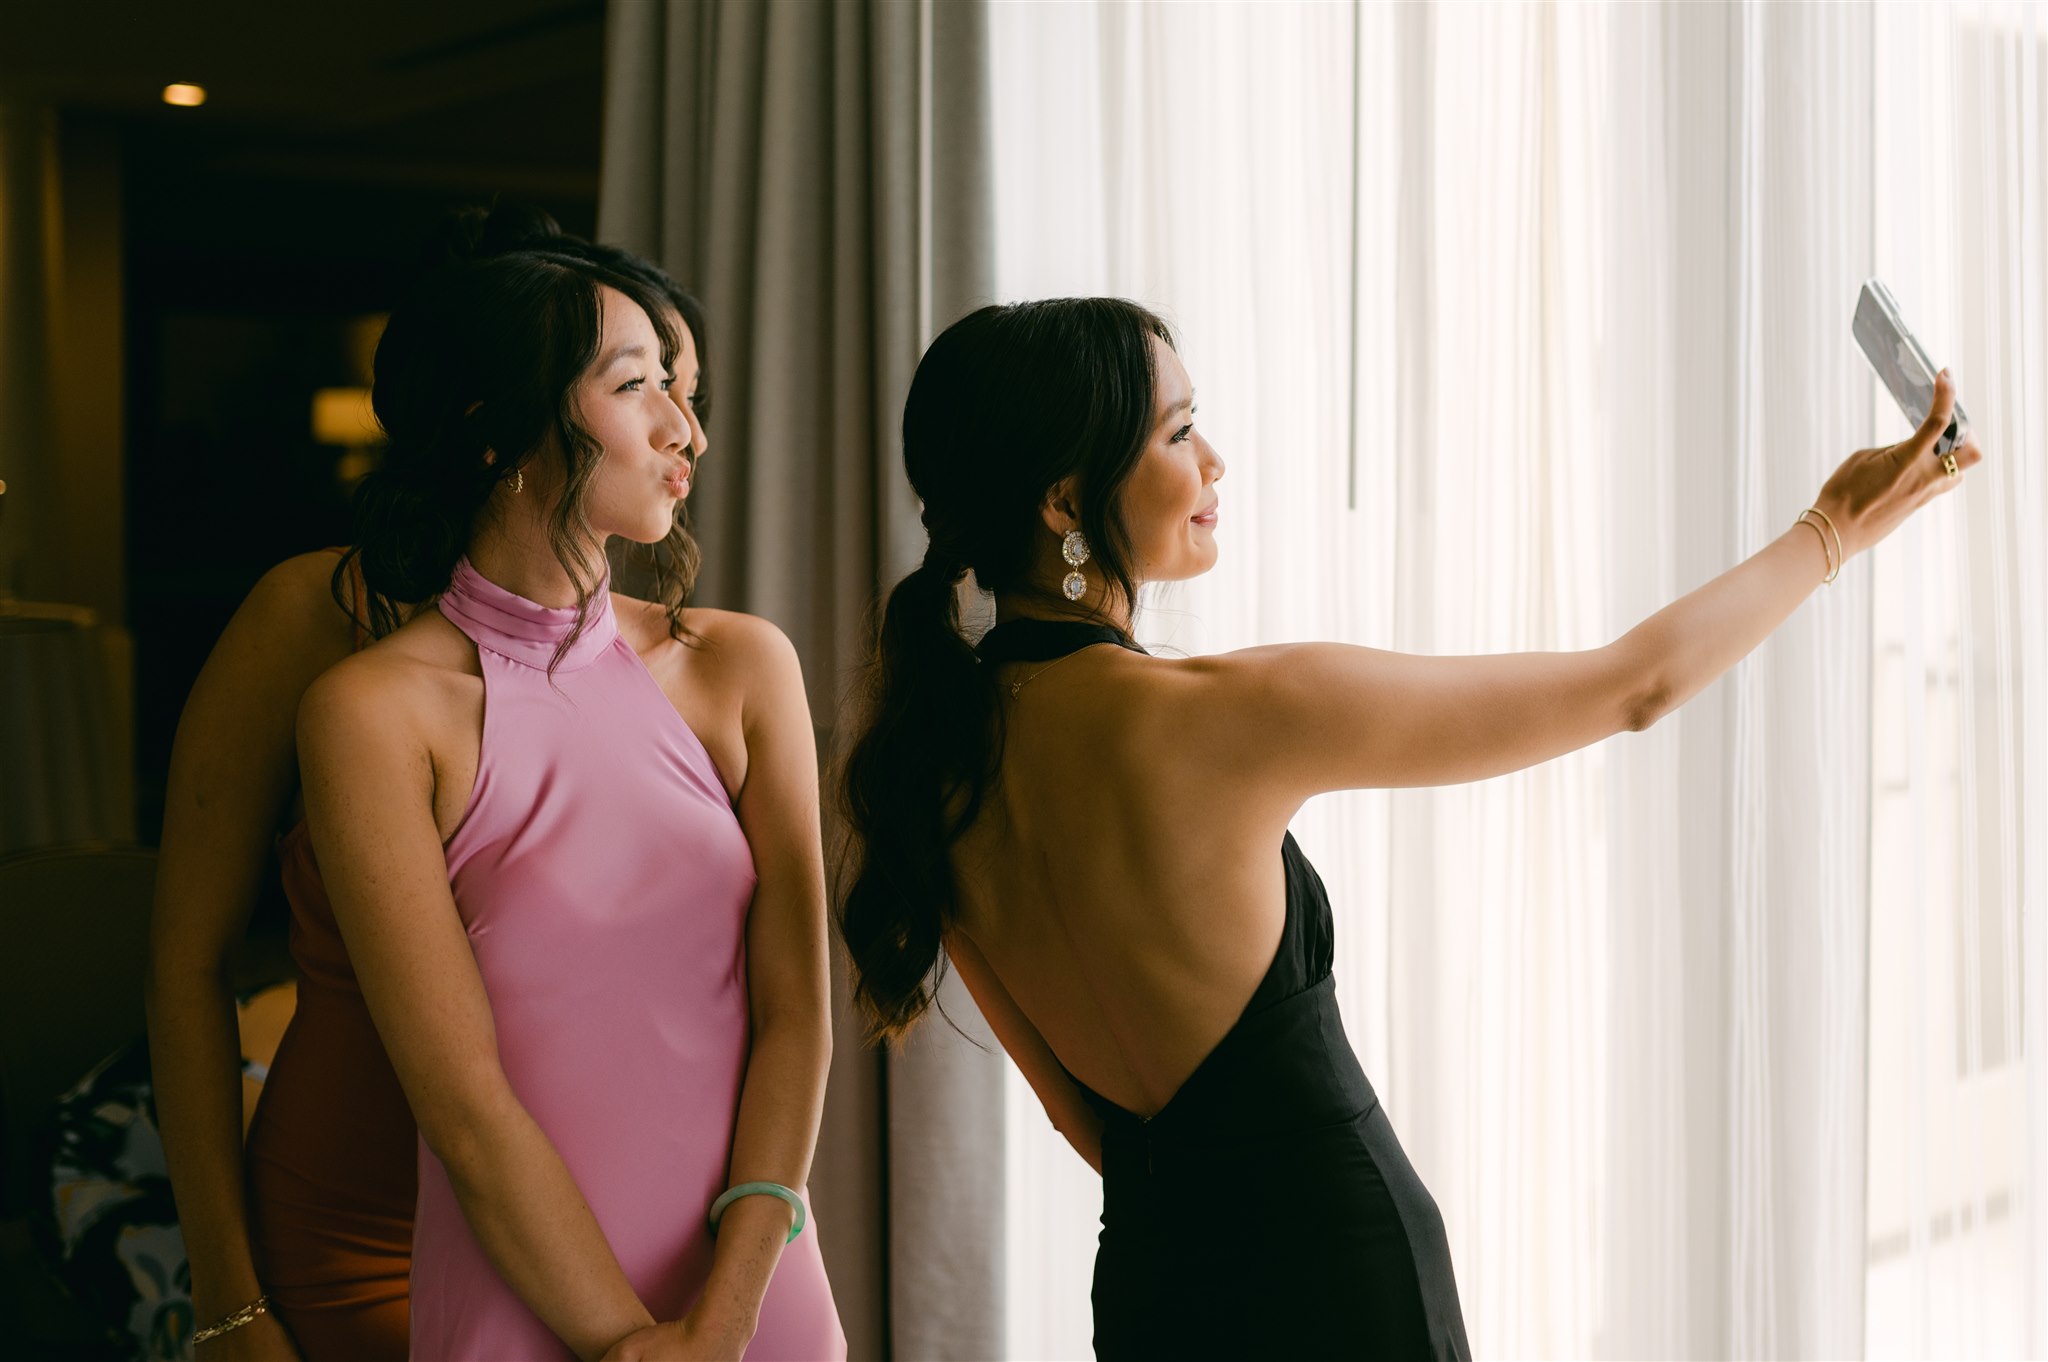 wedding guest selfie backless black dress and satin pink halter top dress open window